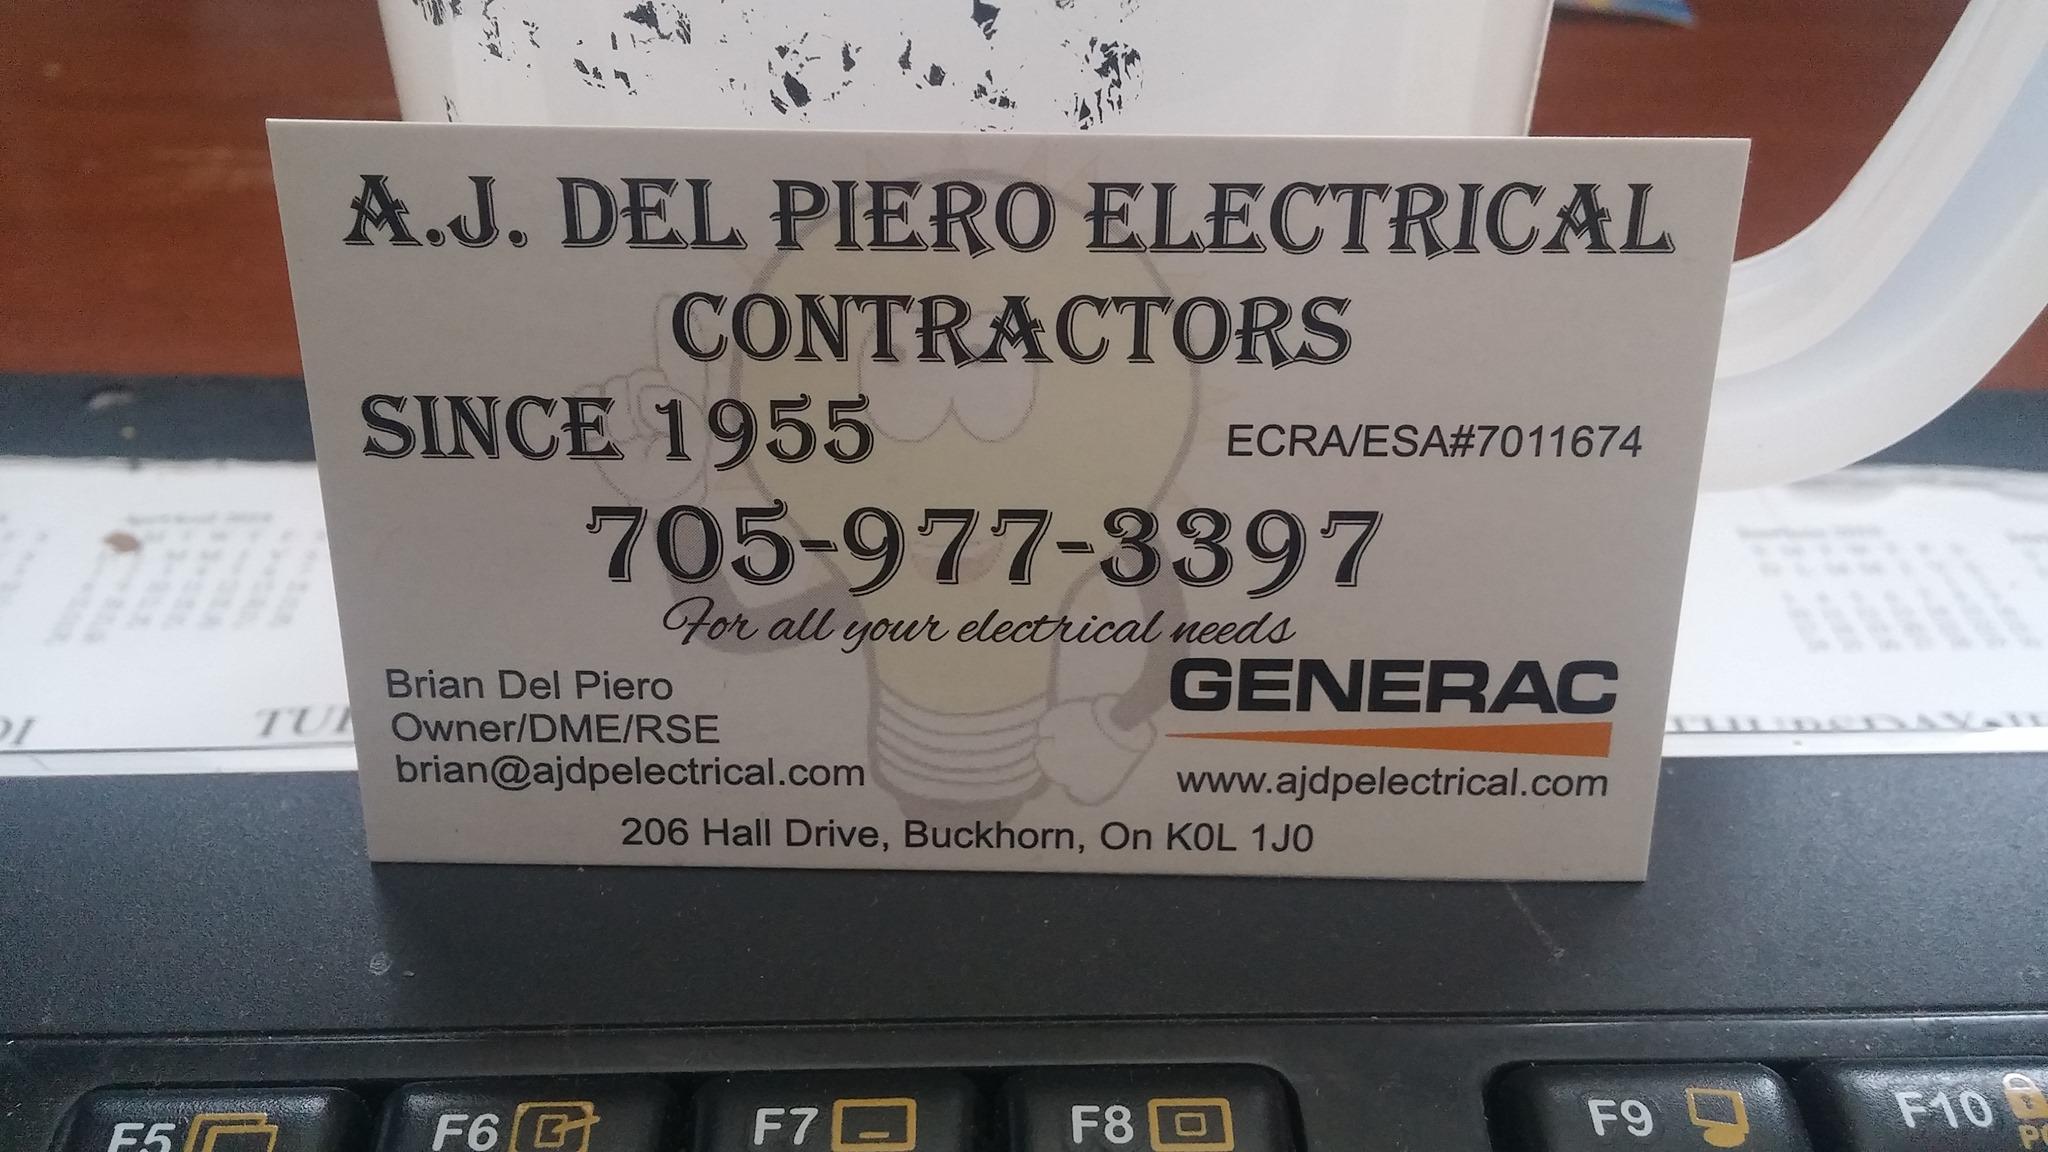 Images A.J. Del Piero Electrical Contractors